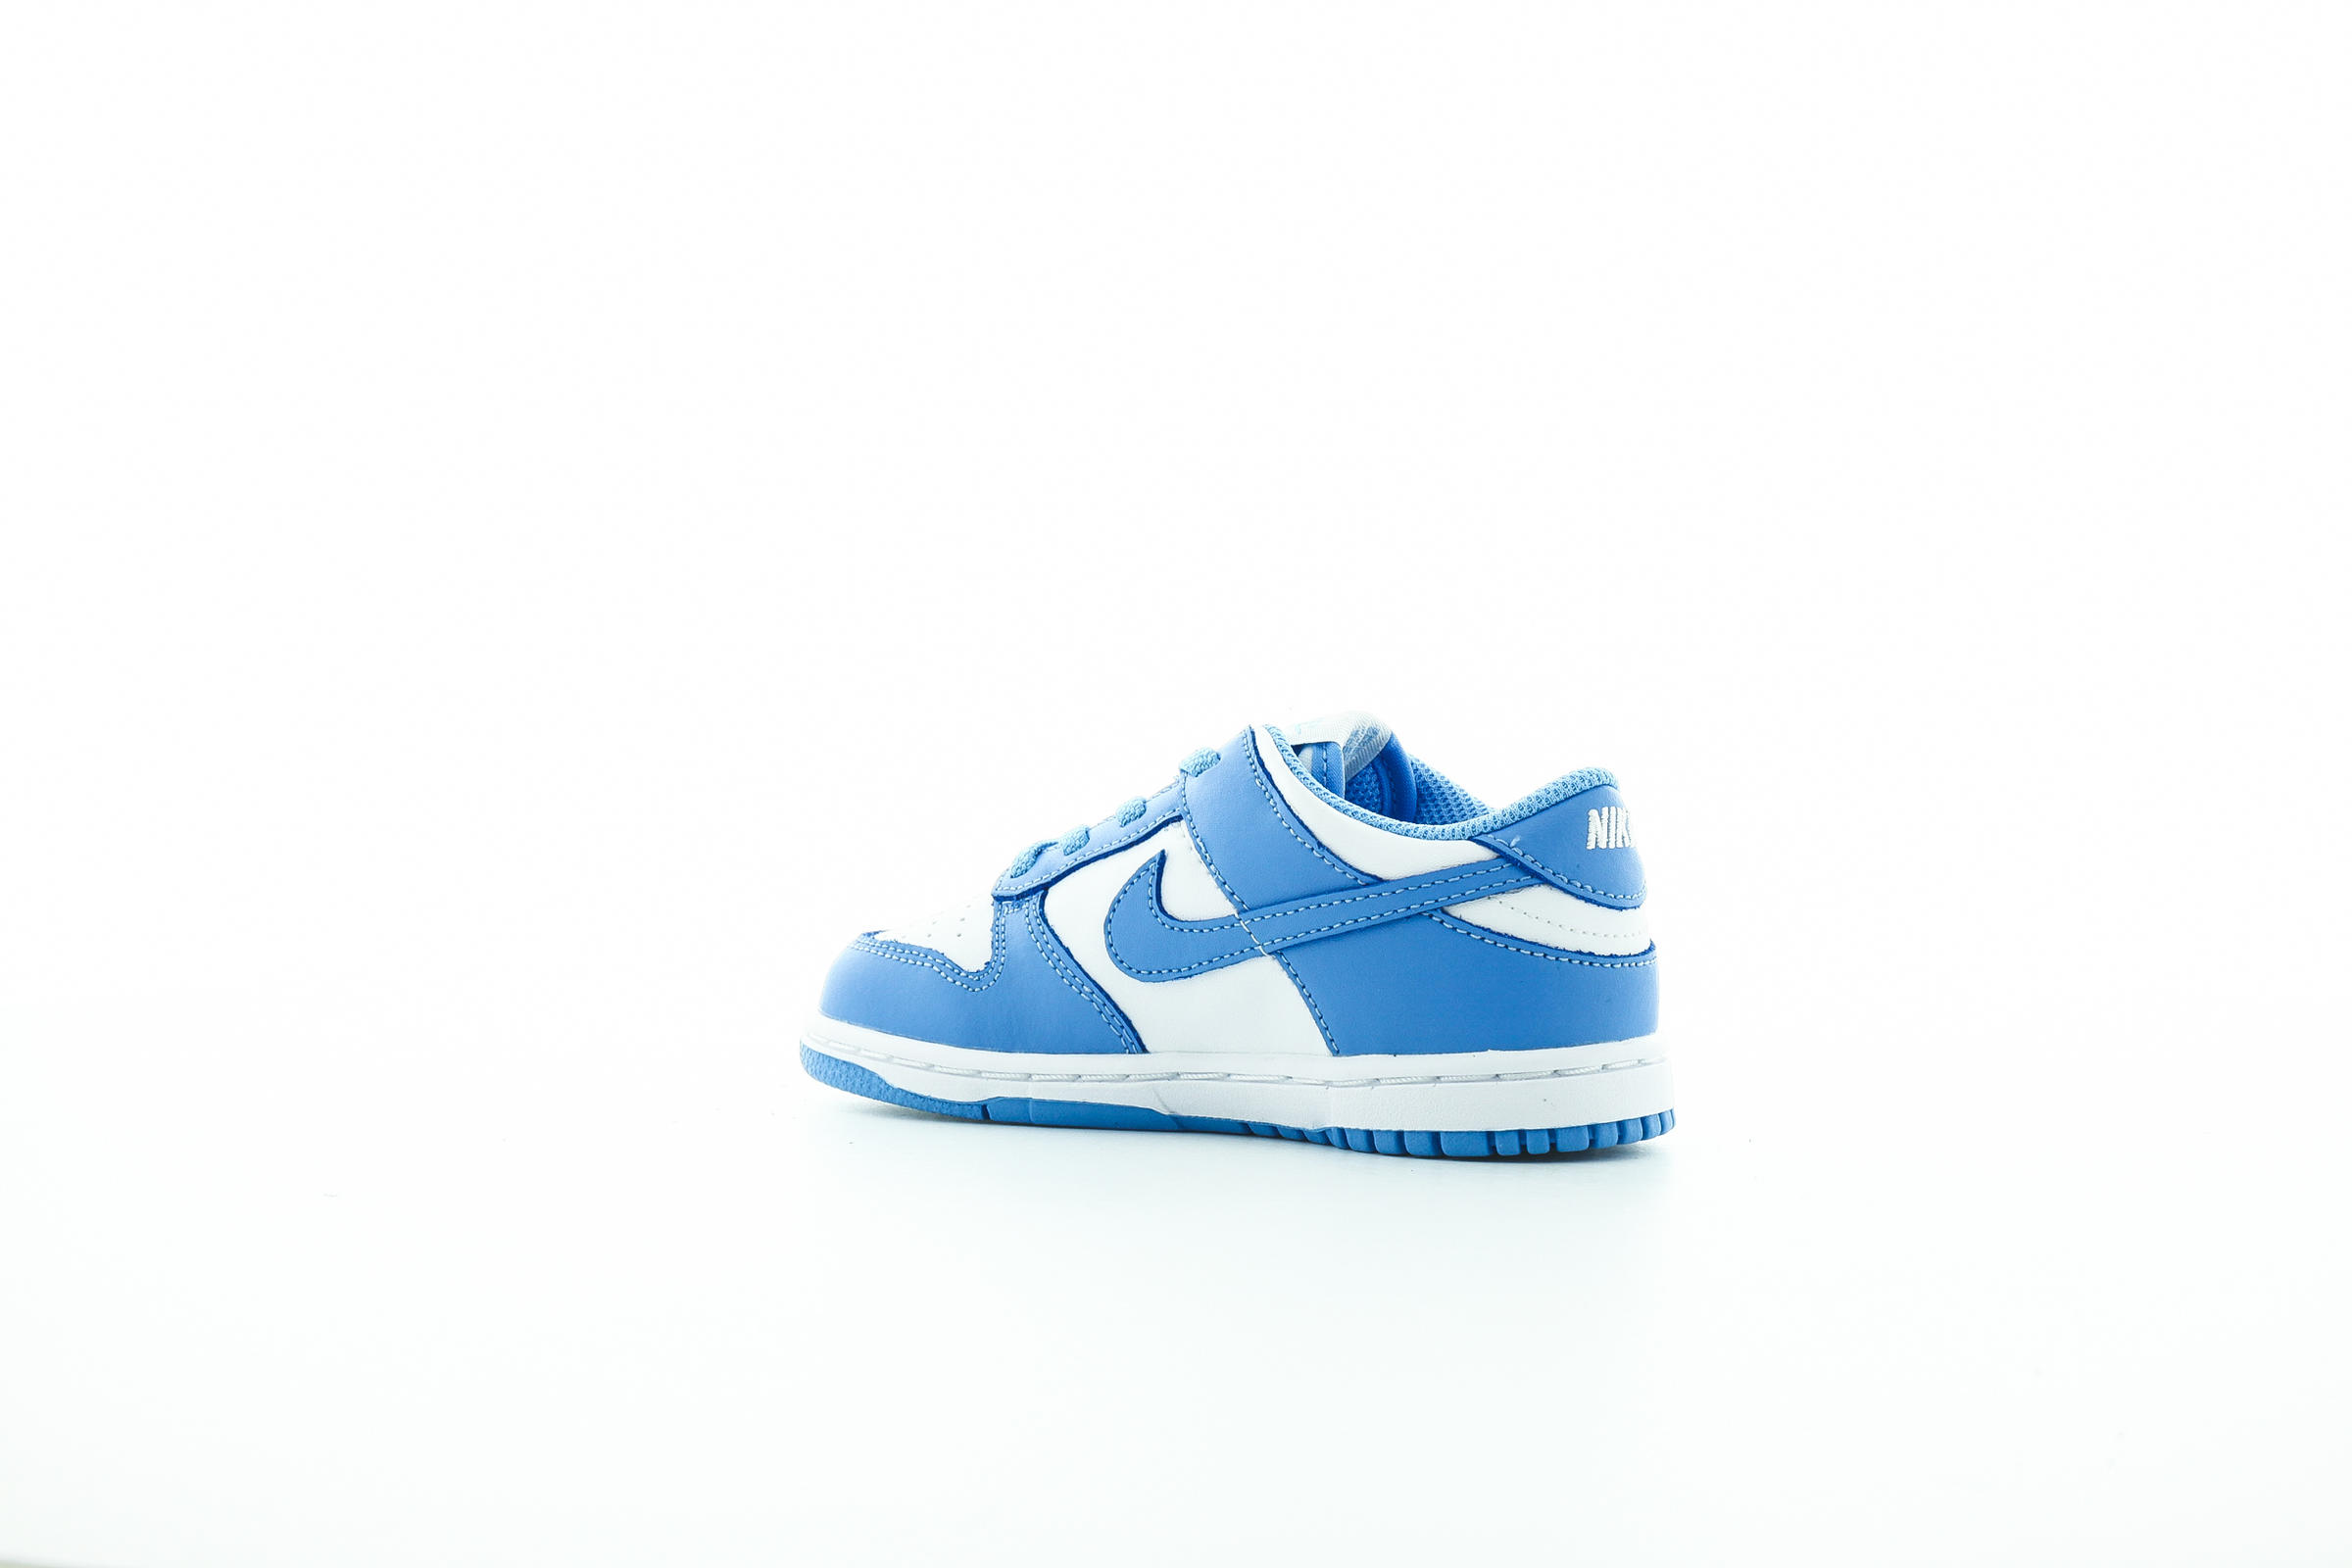 Nike DUNK LOW (TDE) "UNIVERSITY BLUE"